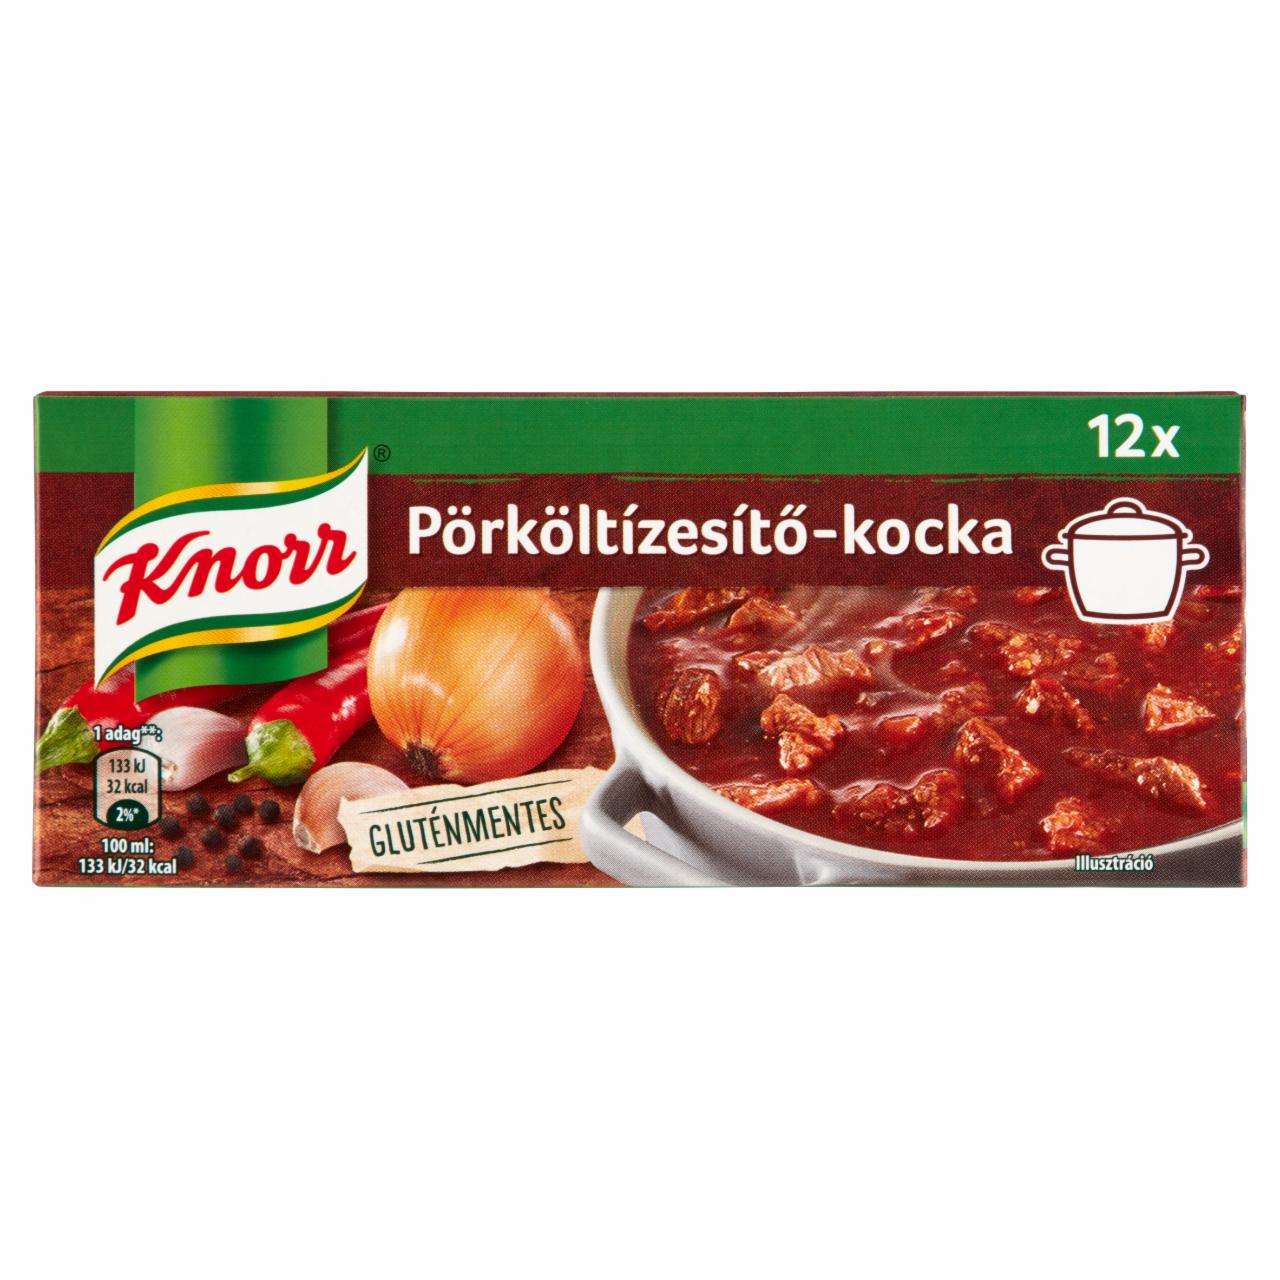 Képek - Knorr pörköltízesítő-kocka 12 x 10 g (120 g)